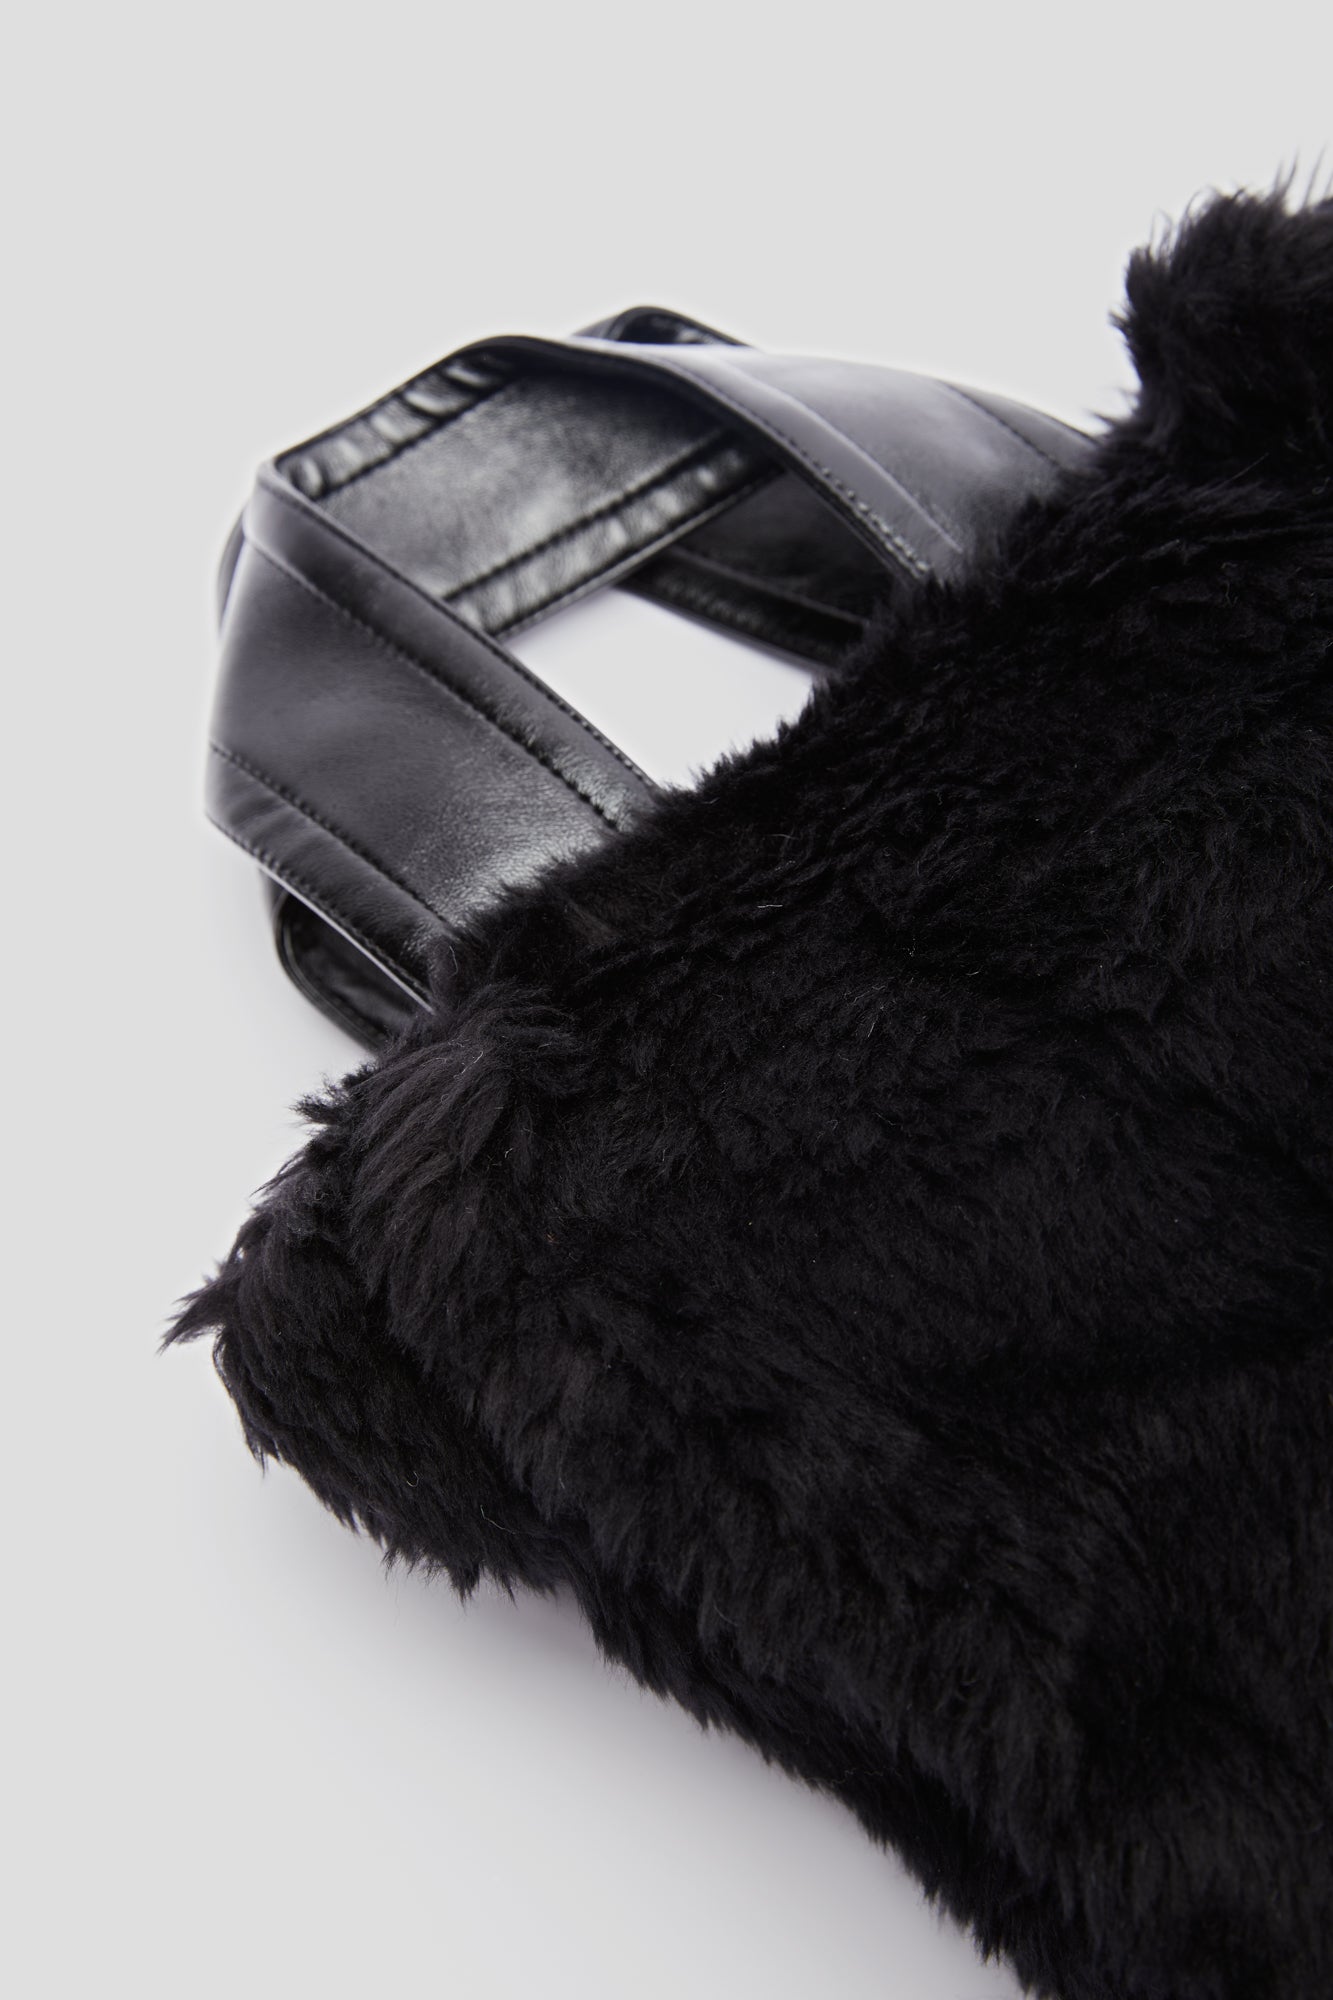 STAND STUDIO Lucille Bag in Black Eco-fur